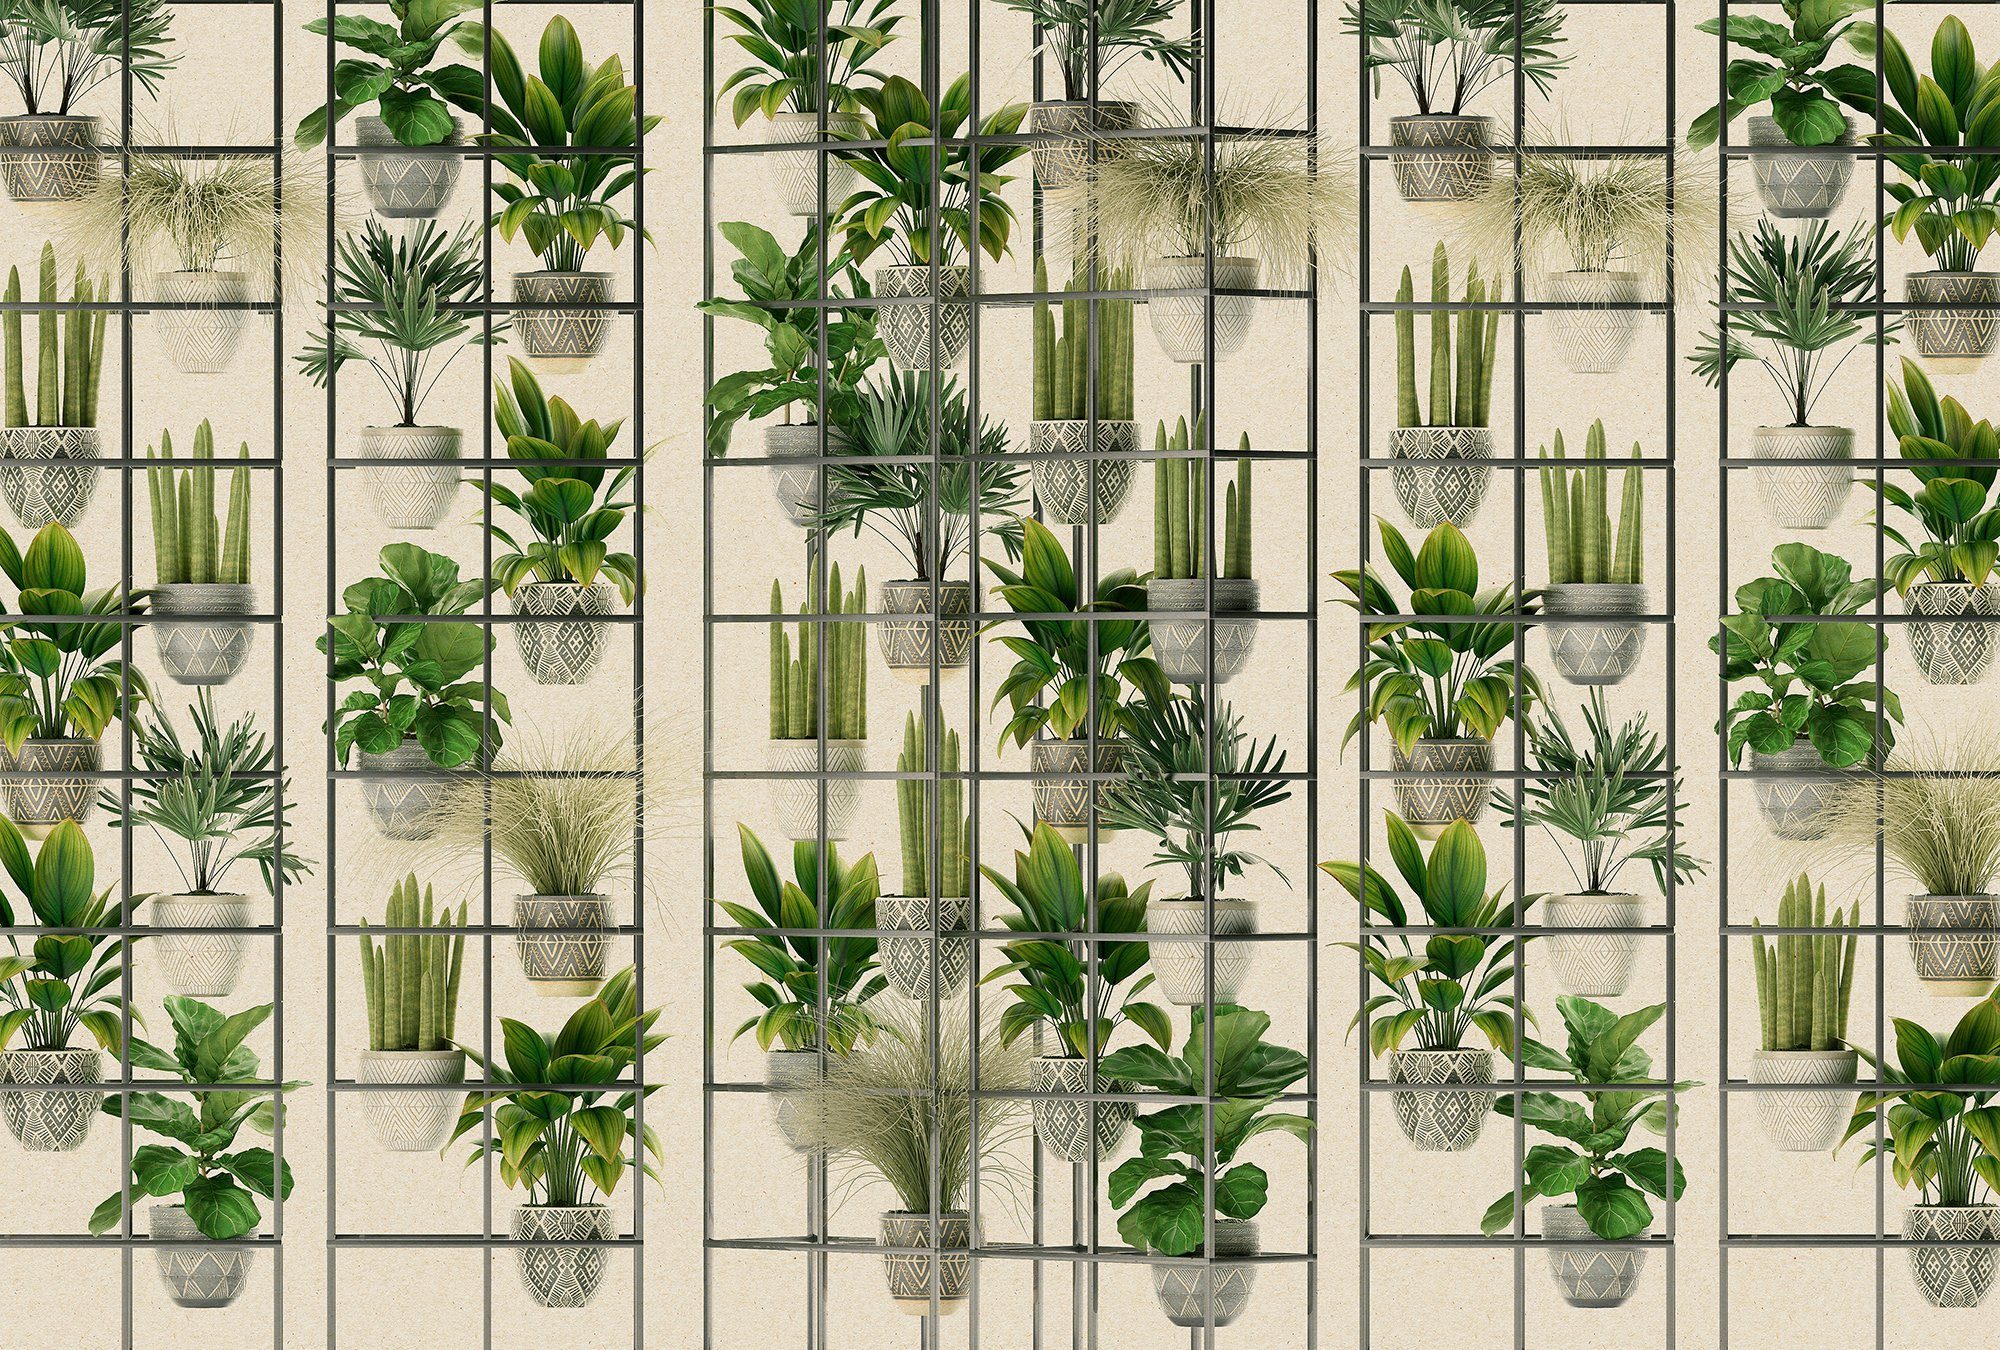 Walls Shop, Vlies, by Wand glatt, walls living Fototapete Plant grün-beige Patel